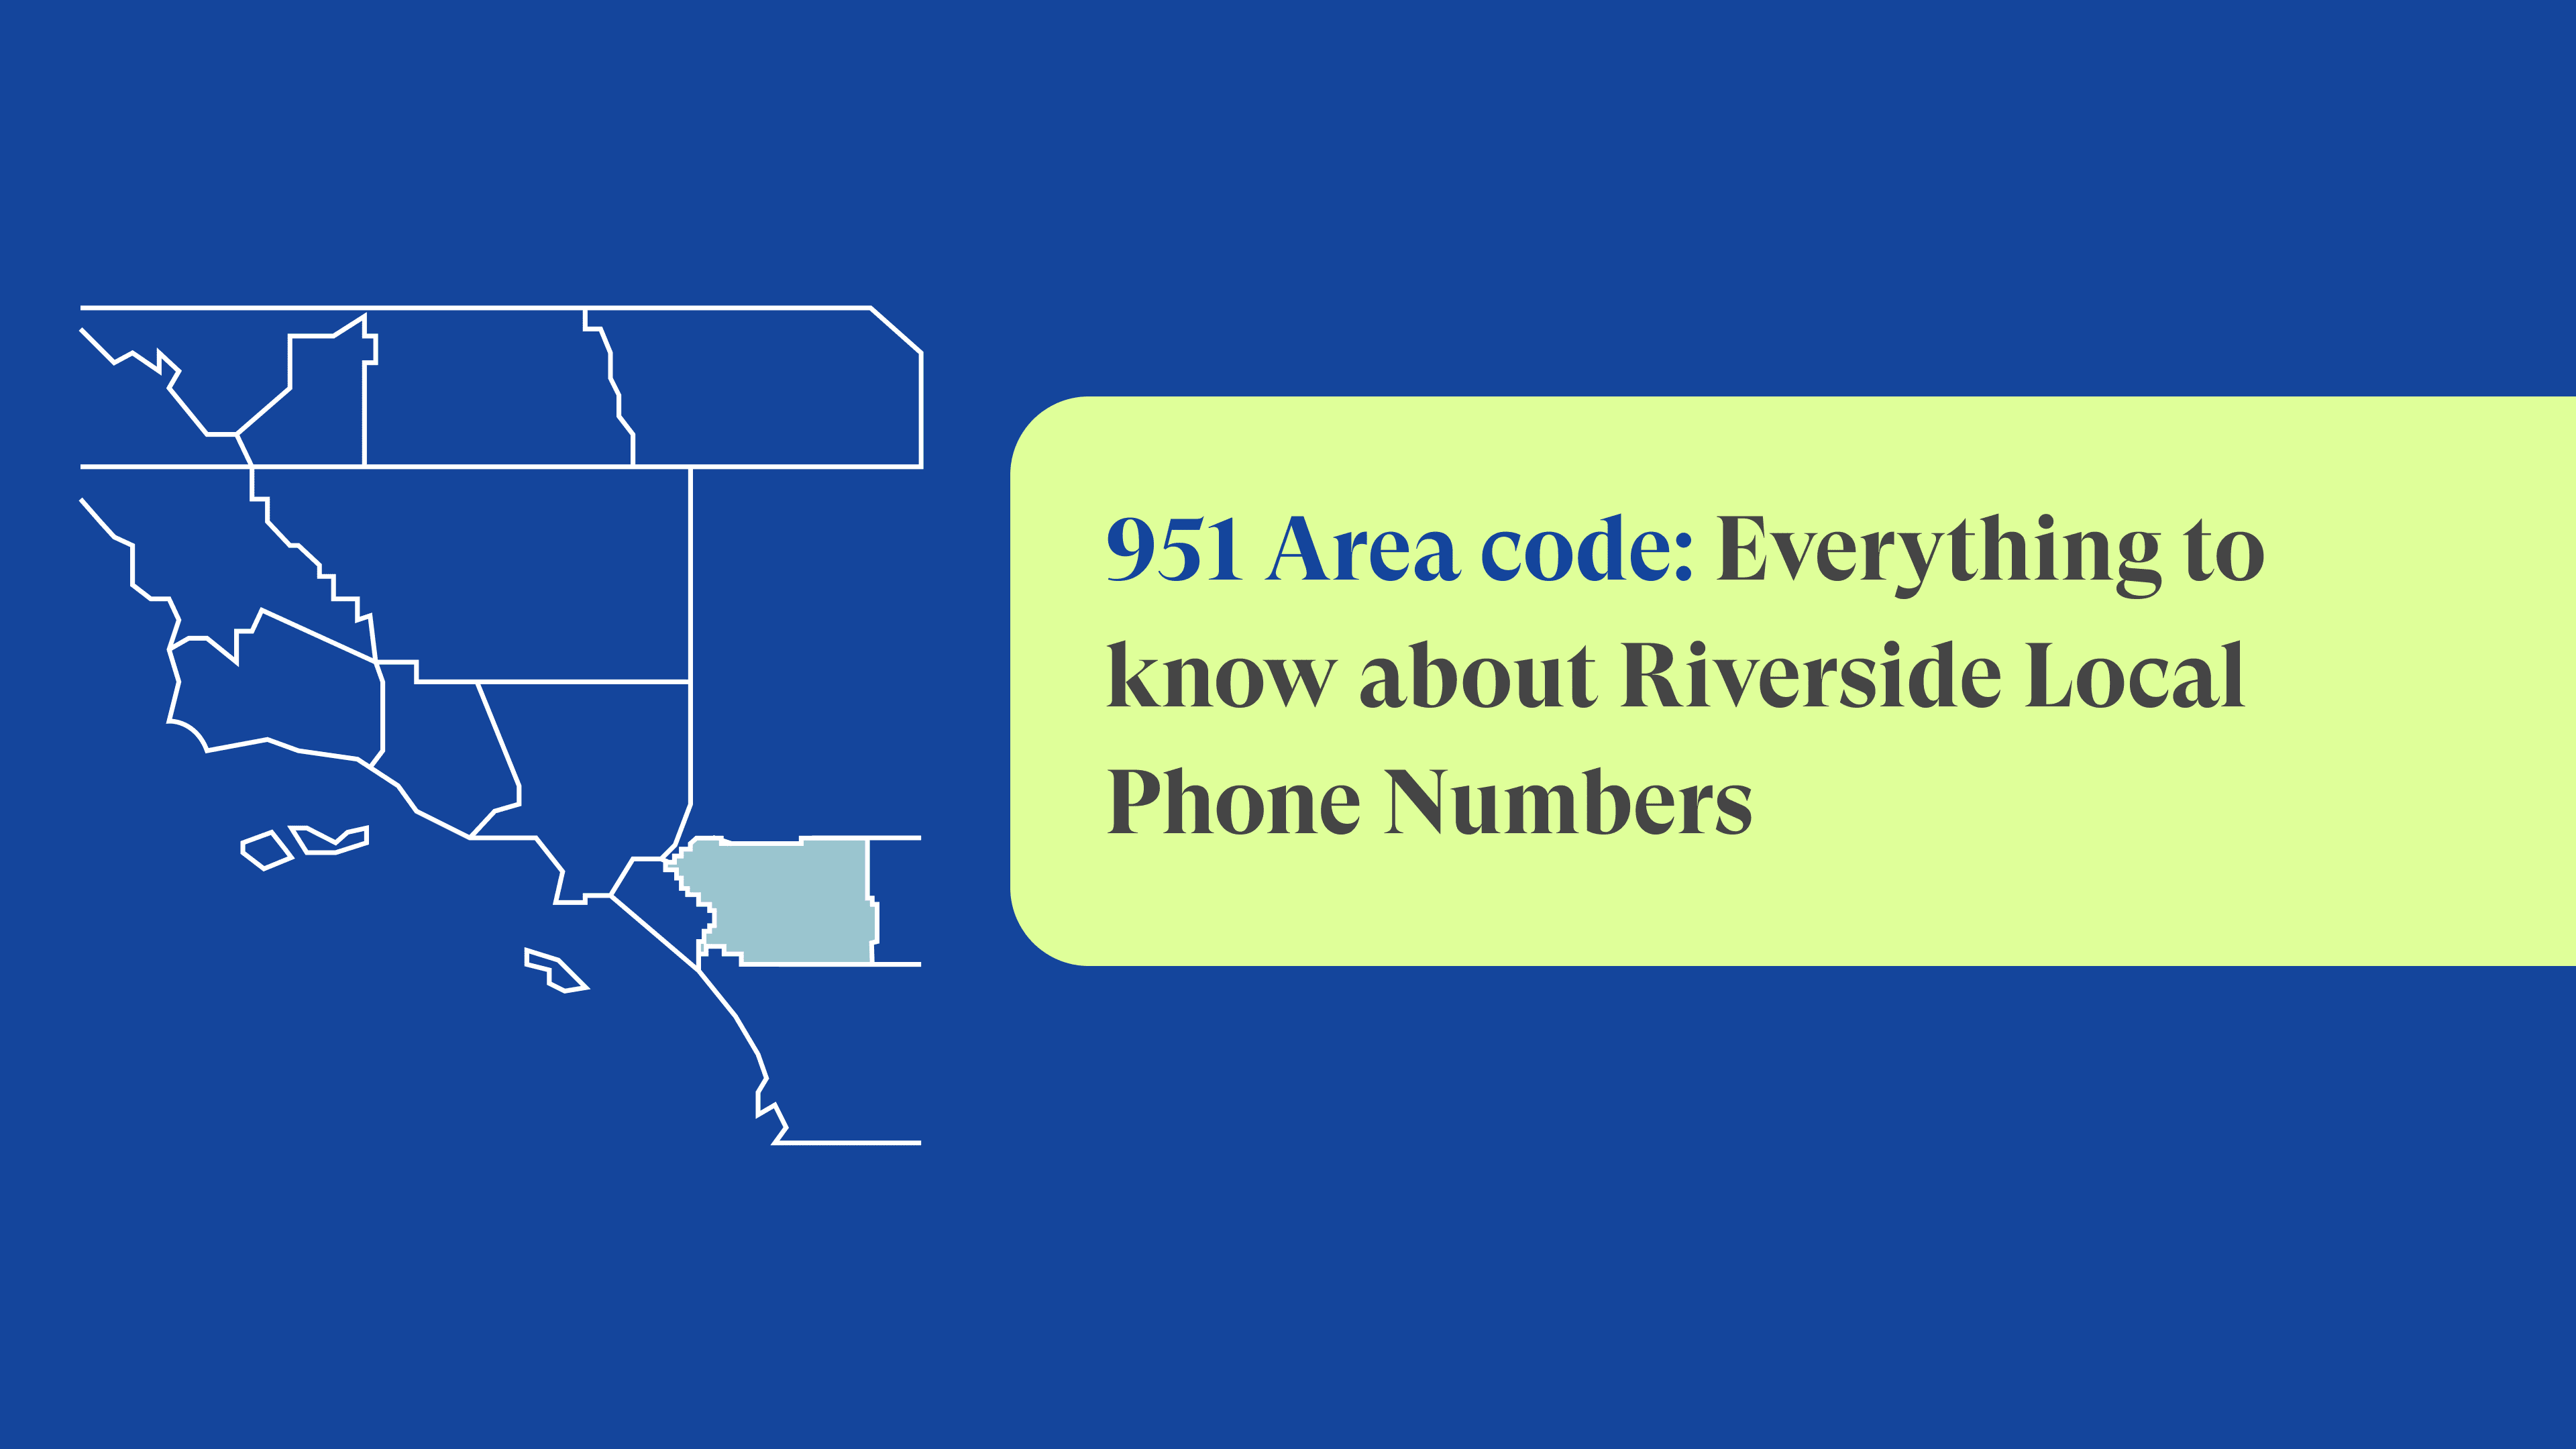 951 Area Code: Riverside Local Phone Numbers